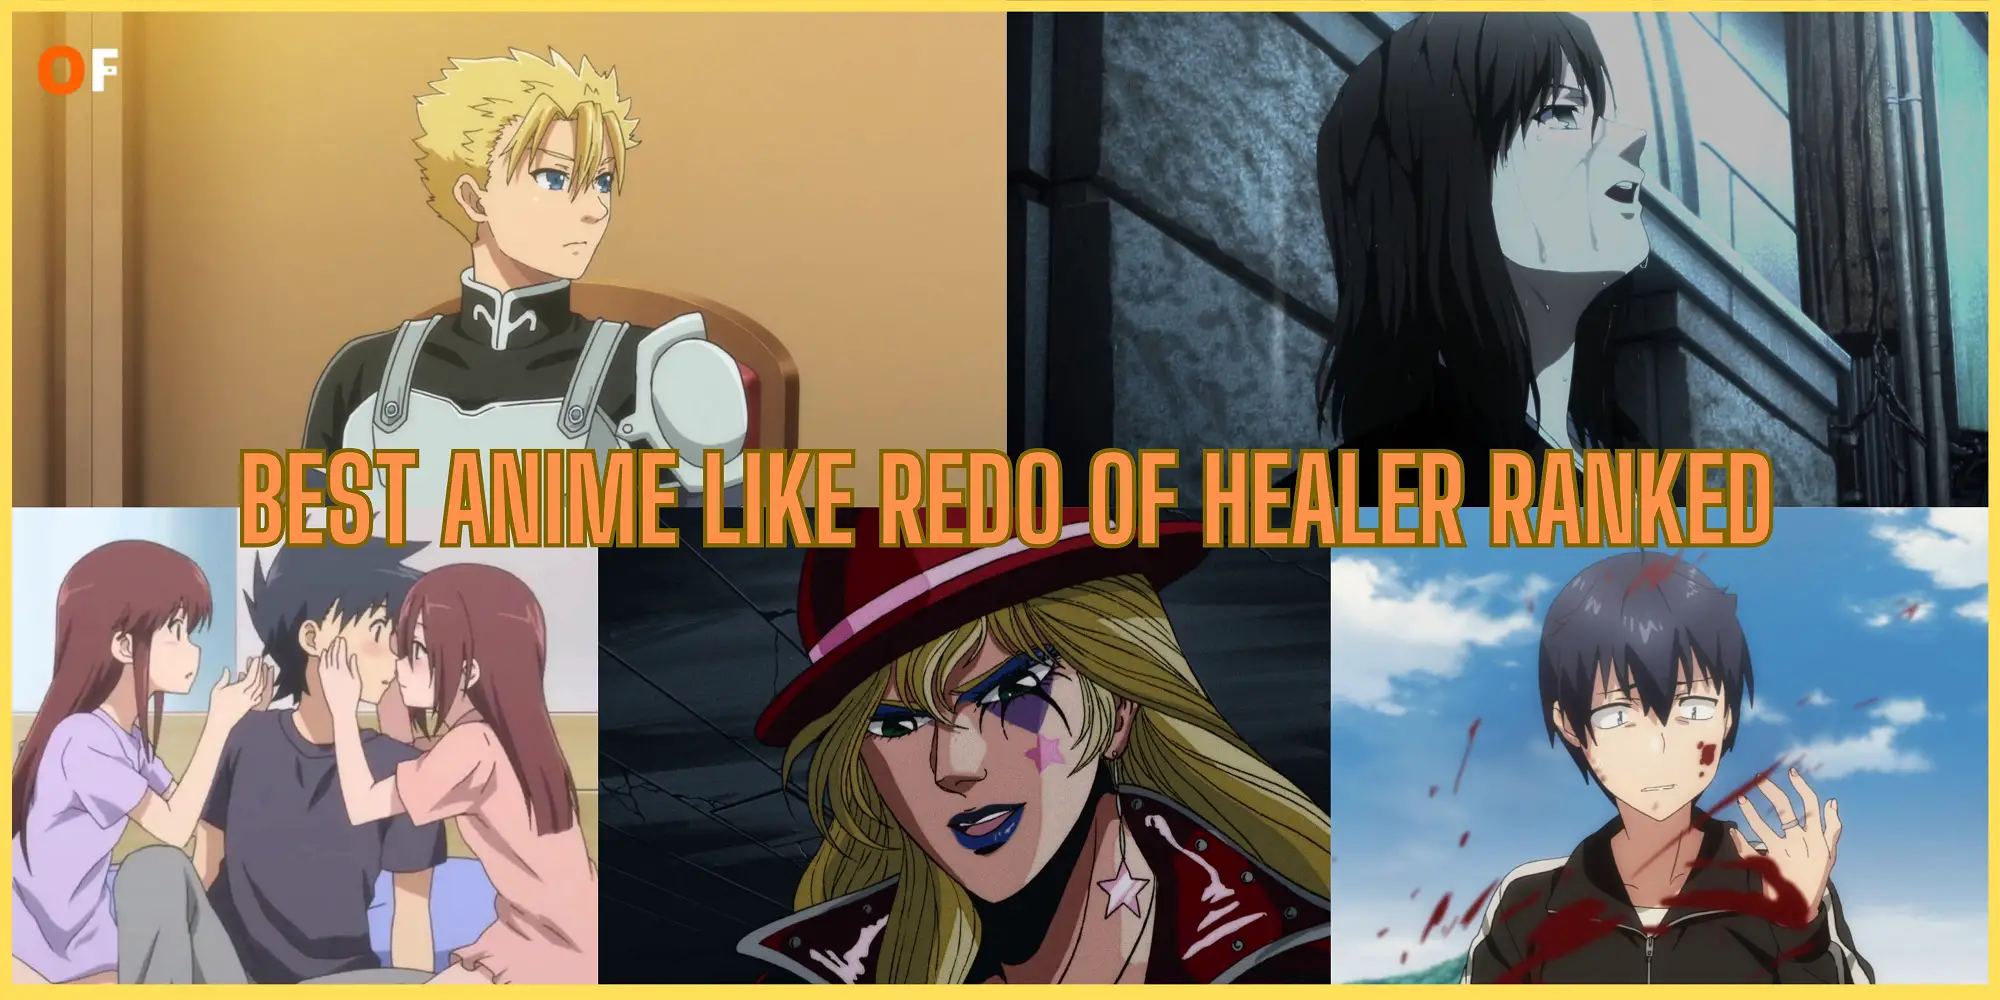 Where to Watch Redo of Healer Anime Series?